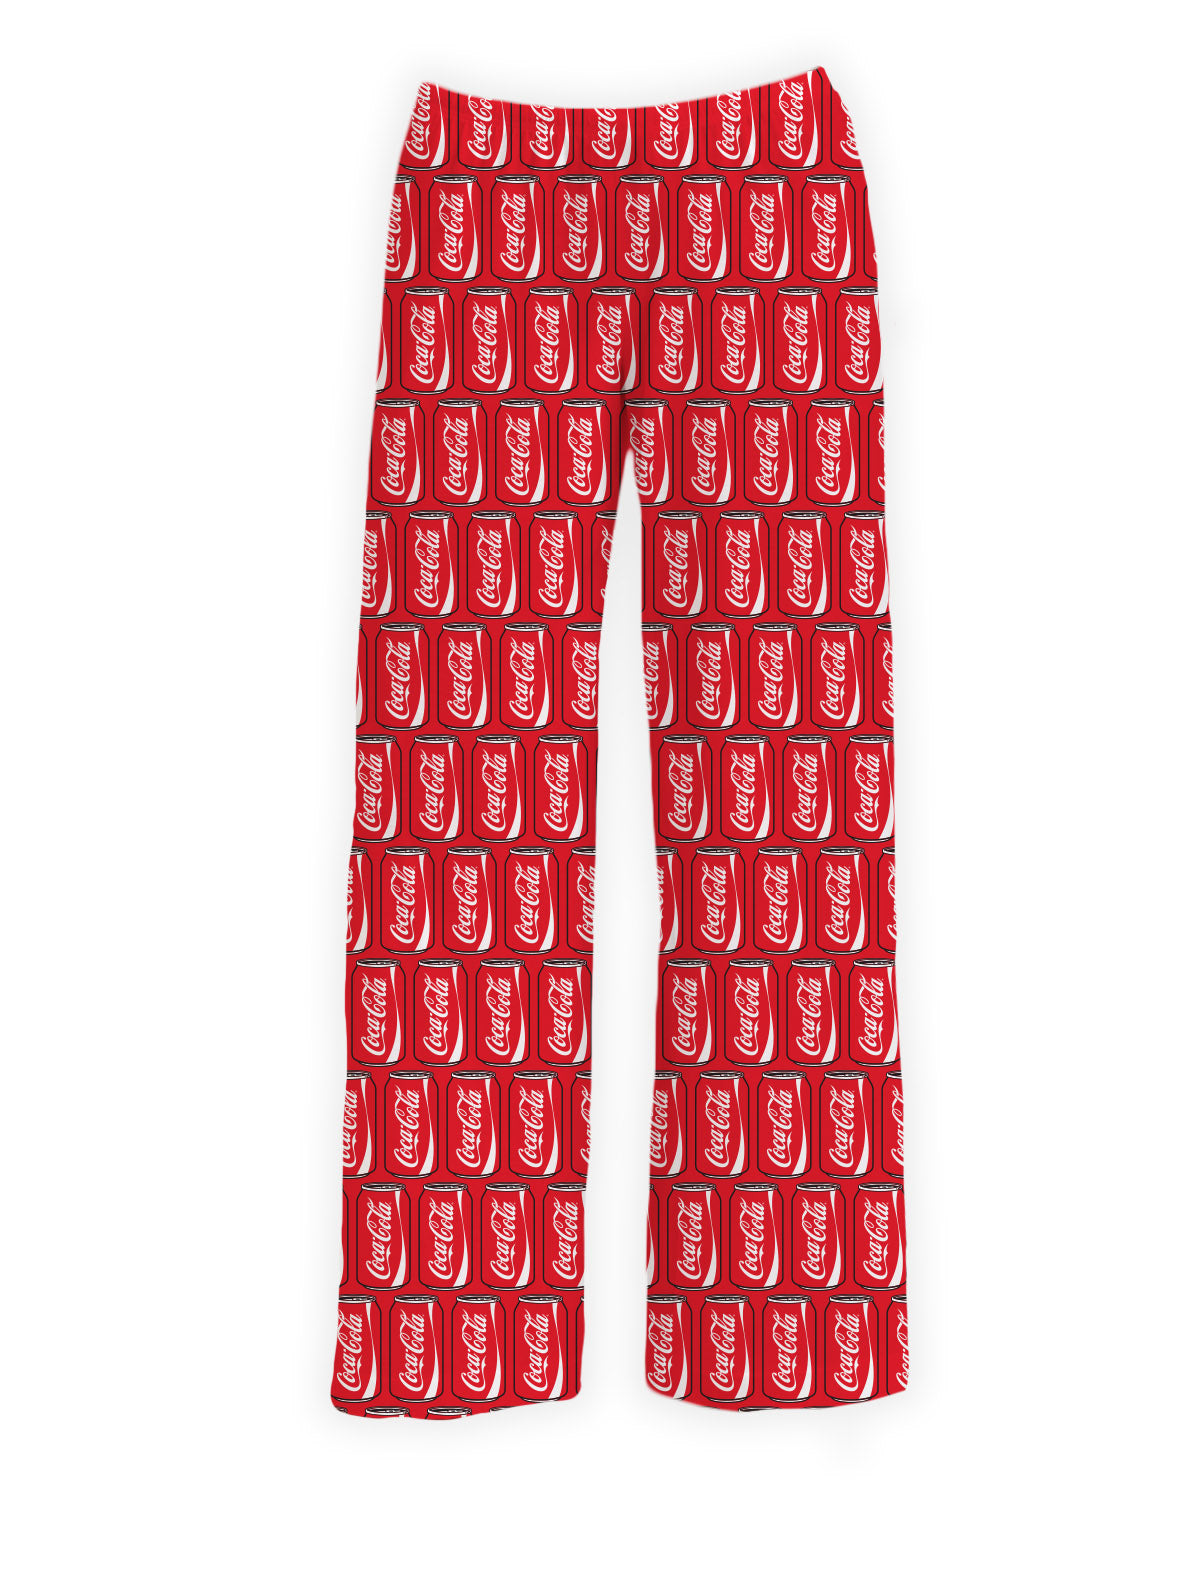 BRIEF INSANITY Coca-Cola Can Pattern Pajama Lounge Pants